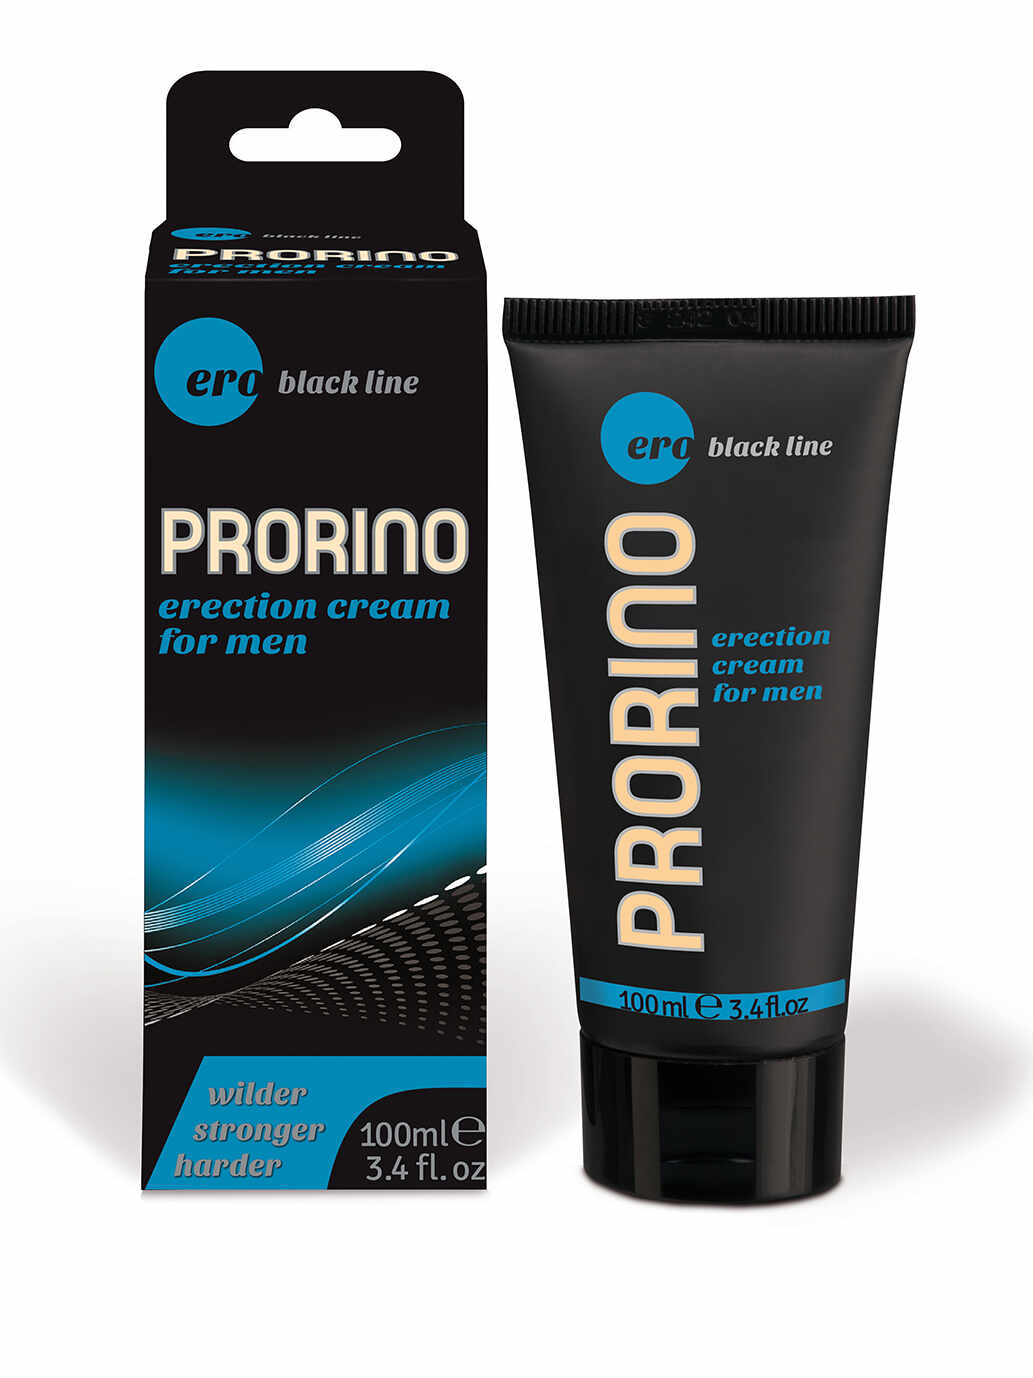 ERO black line Prorino erection cream for men